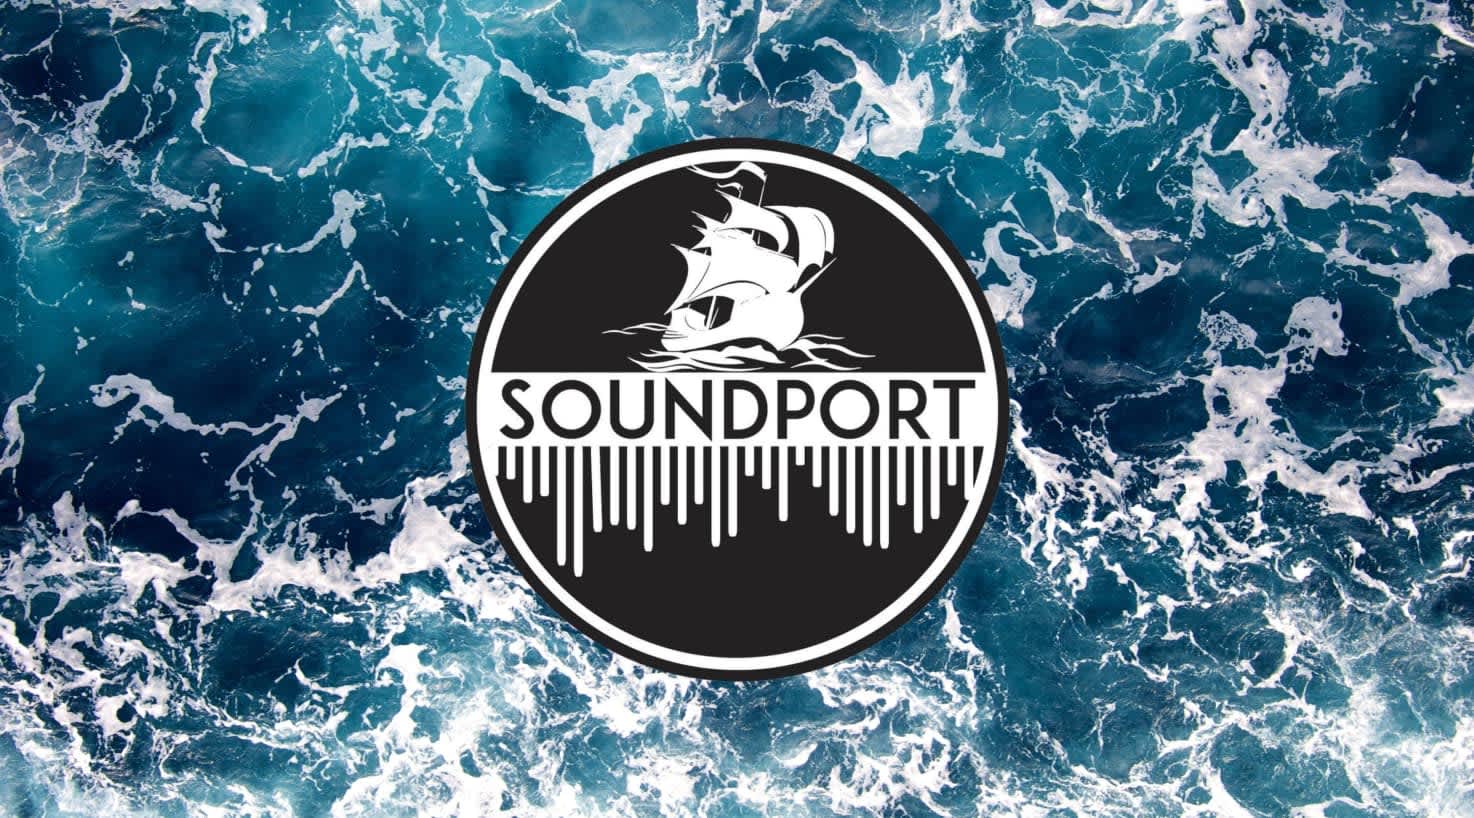 Introducing Soundport